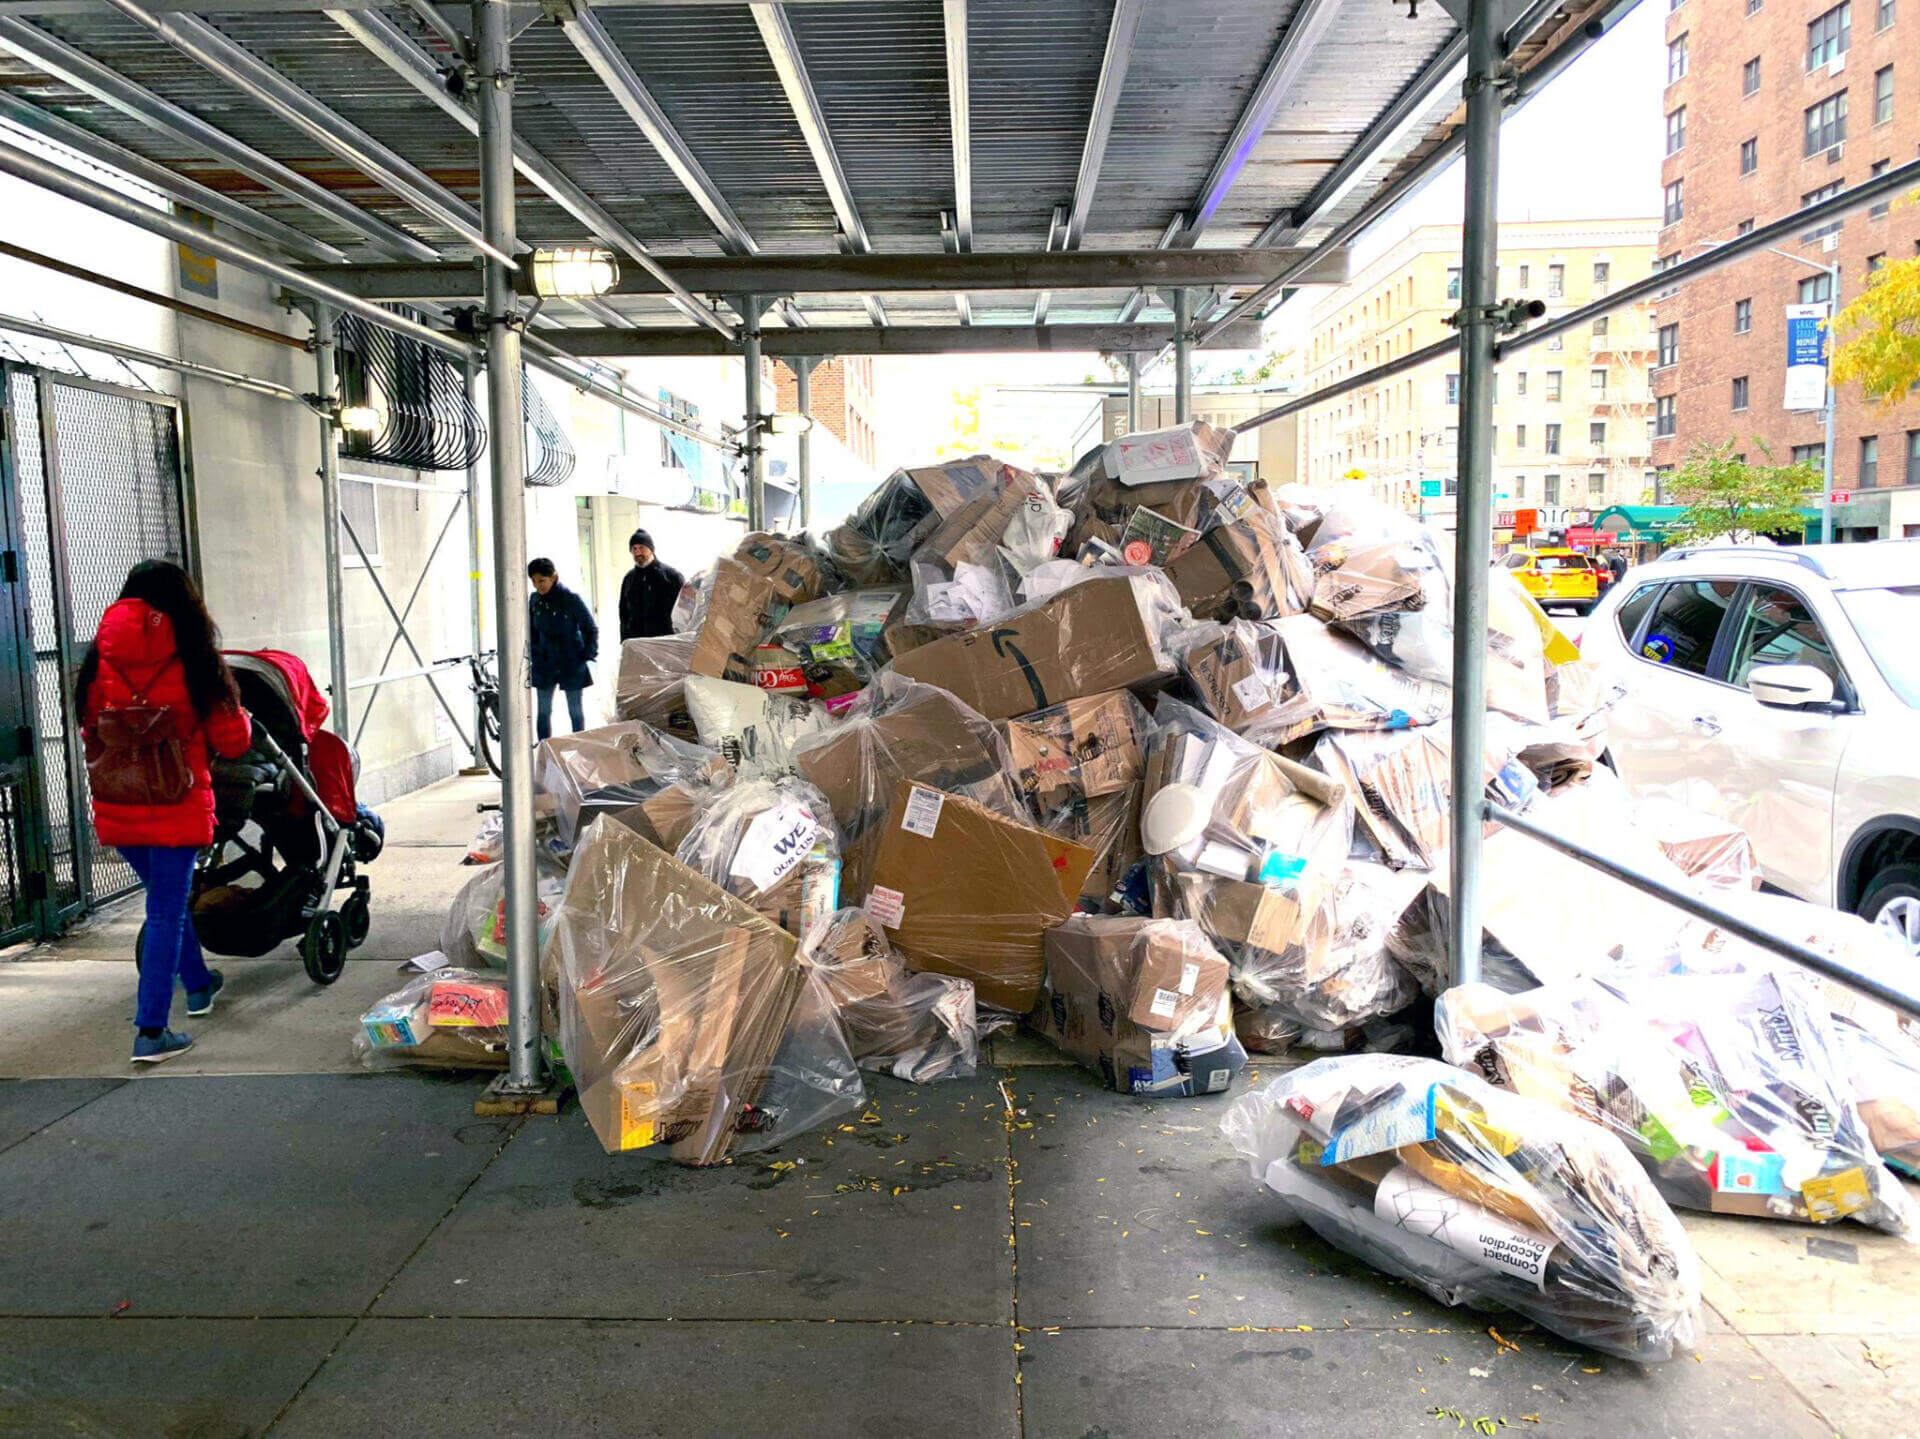 Piles of trash under scaffolding